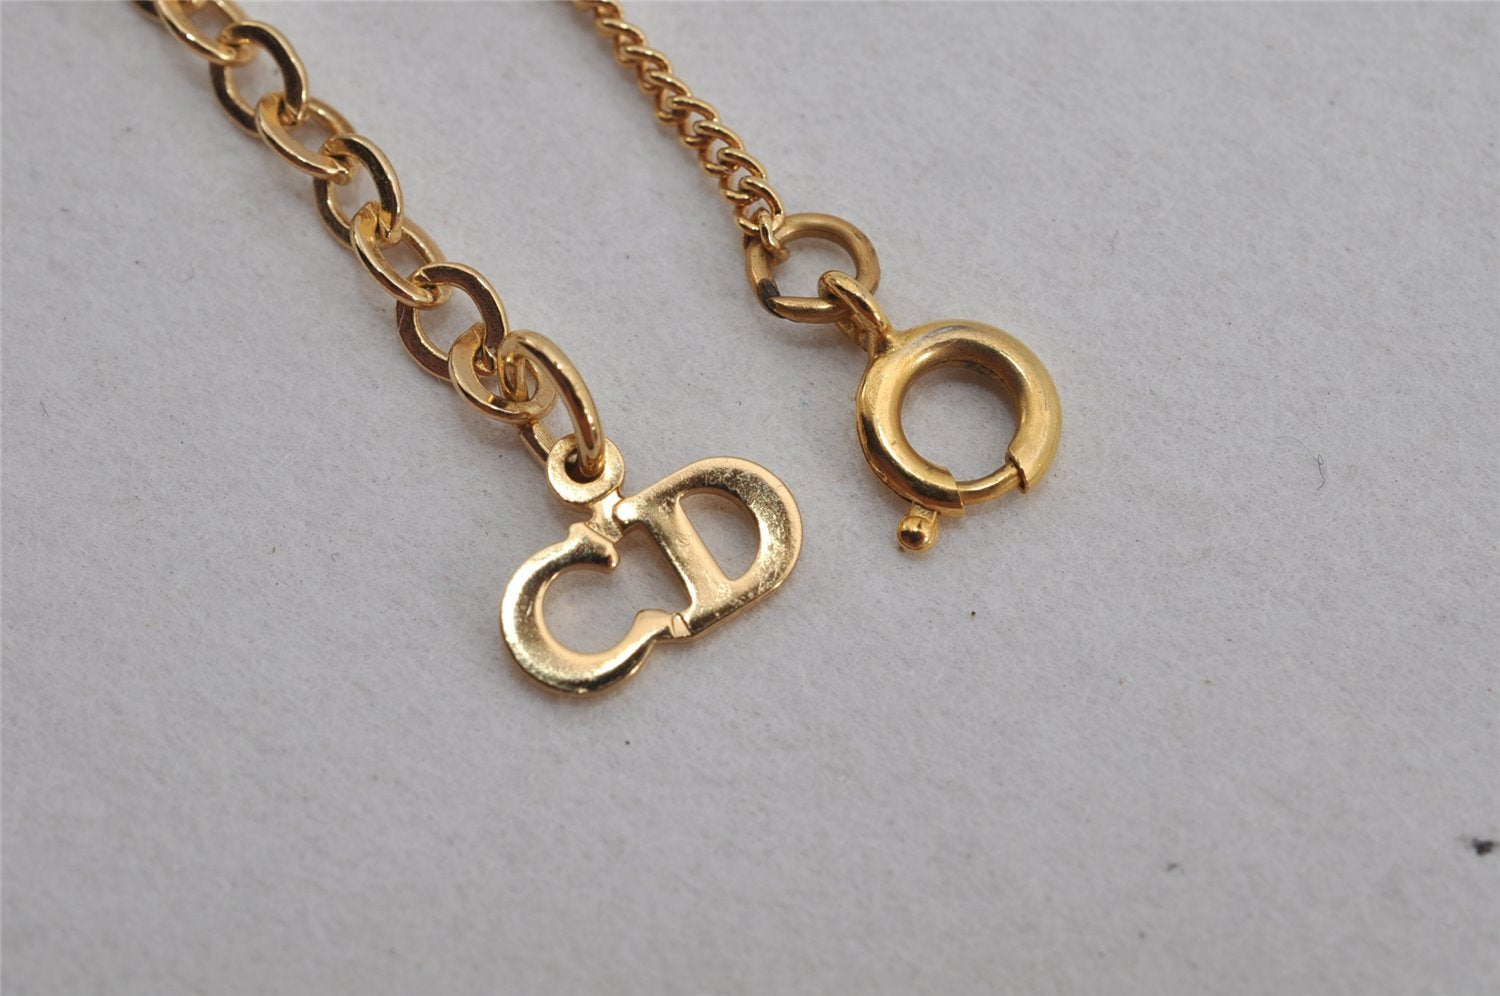 Authentic Christian Dior Gold Tone Chain Pendant Necklace CD 9767J